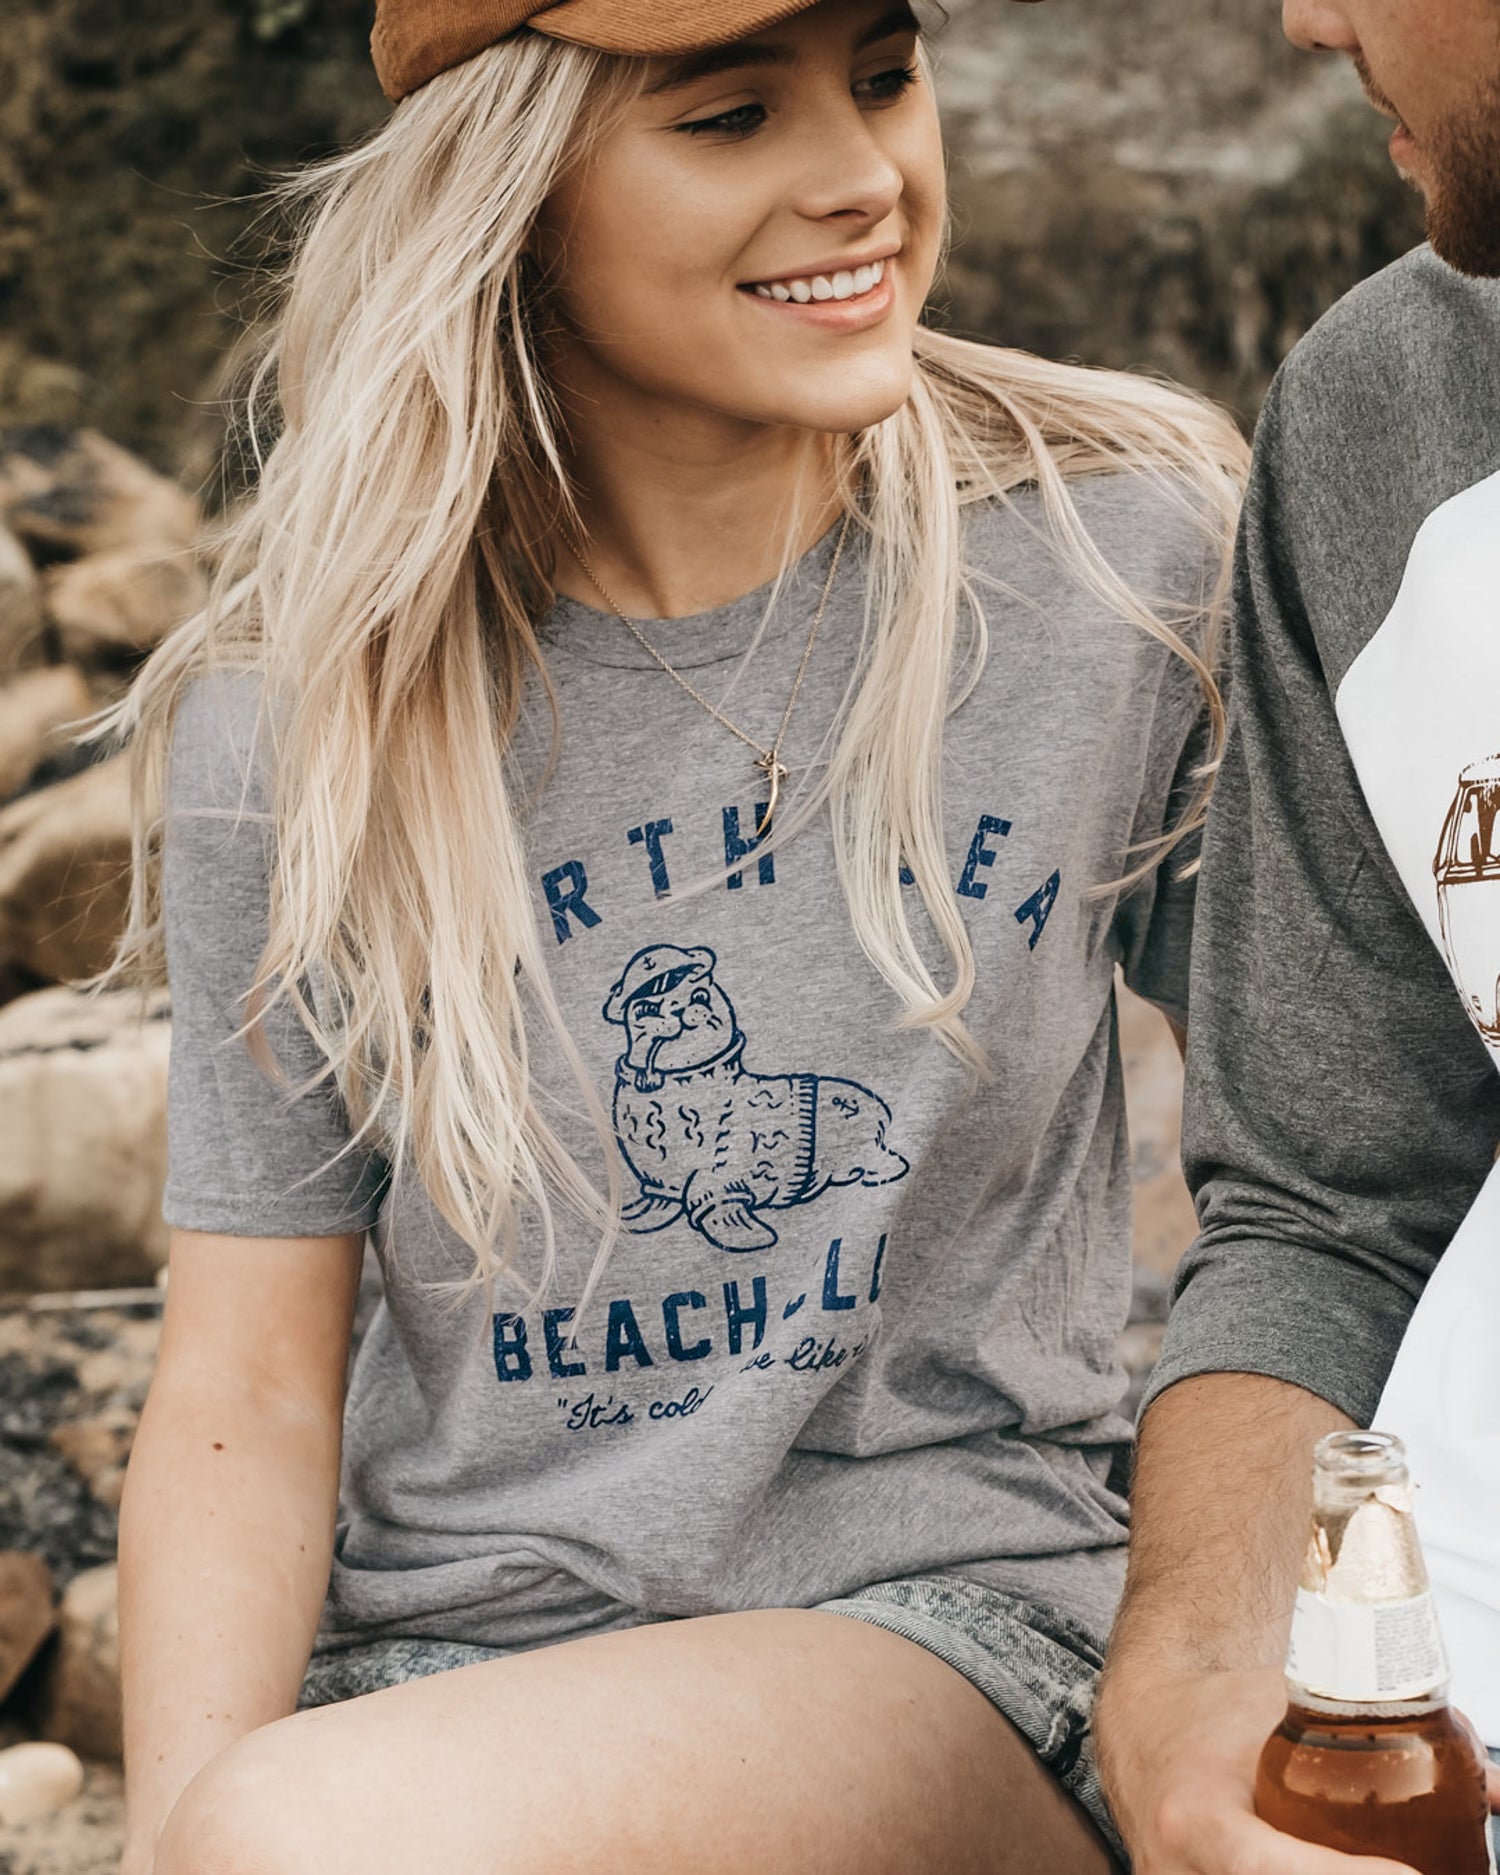 North Sea Beach Club Grey T-Shirt by ART DISCO Original Goods